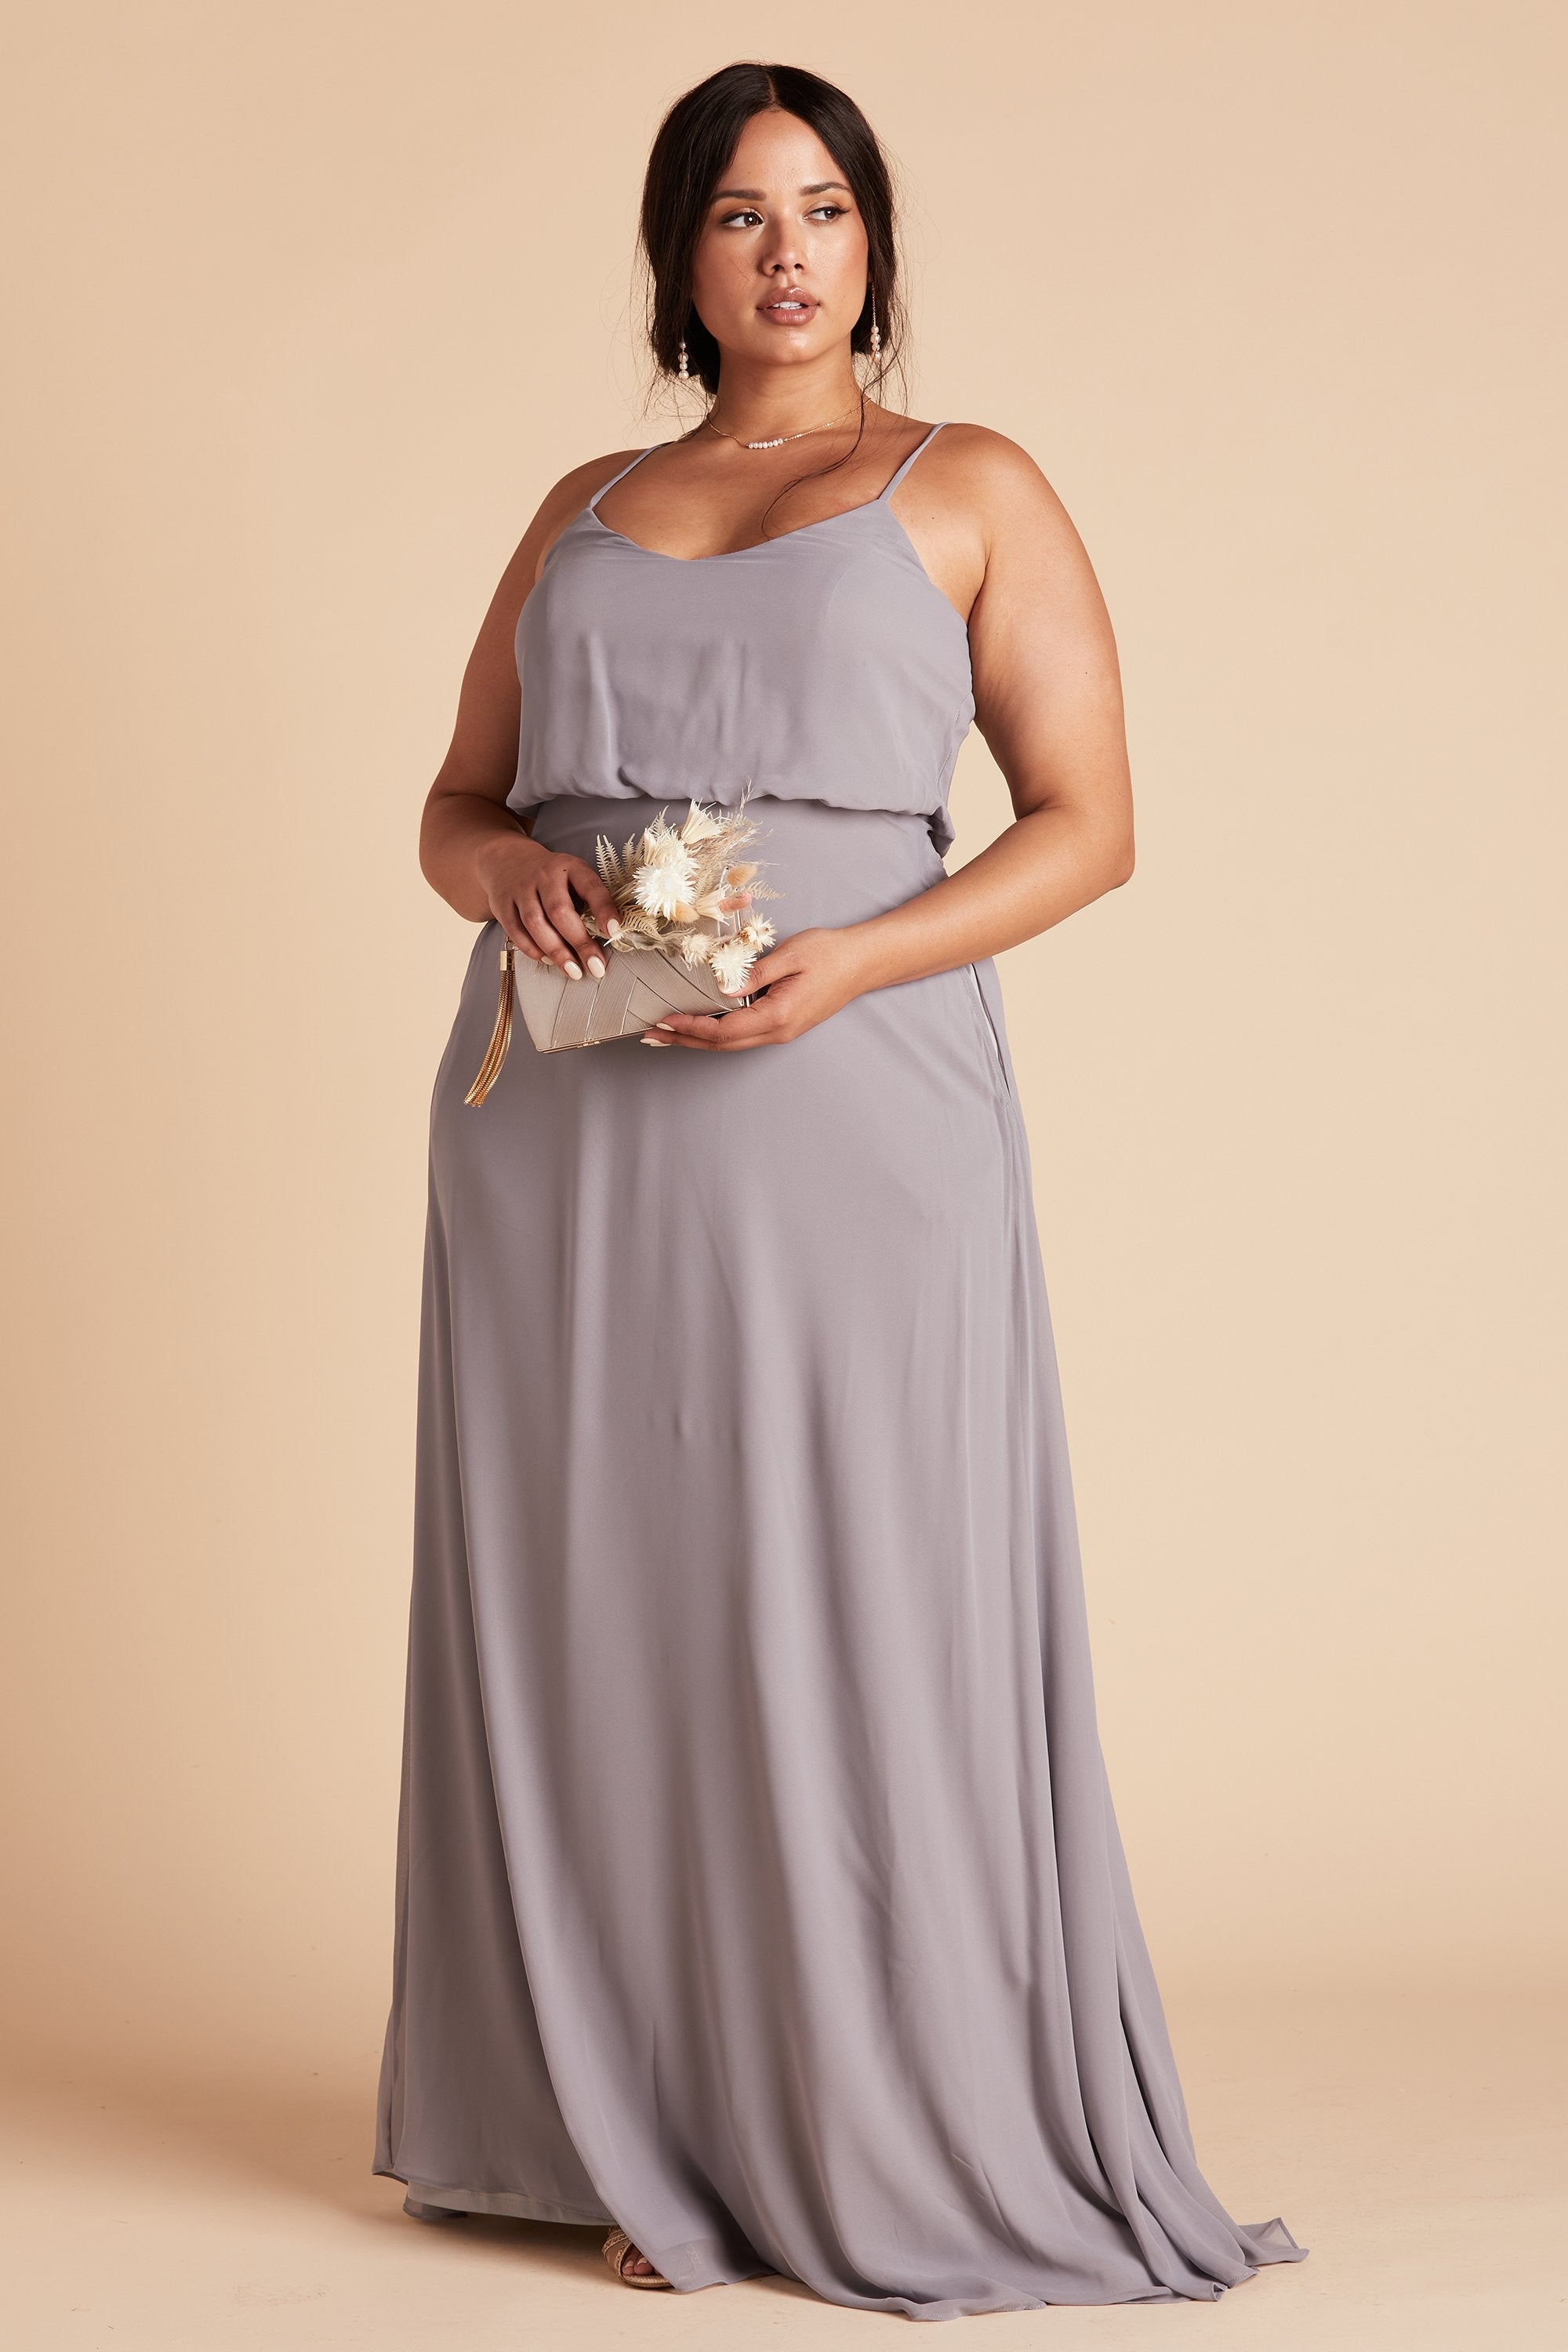 Gwennie plus size bridesmaid dress in silver chiffon by Birdy Grey, front view